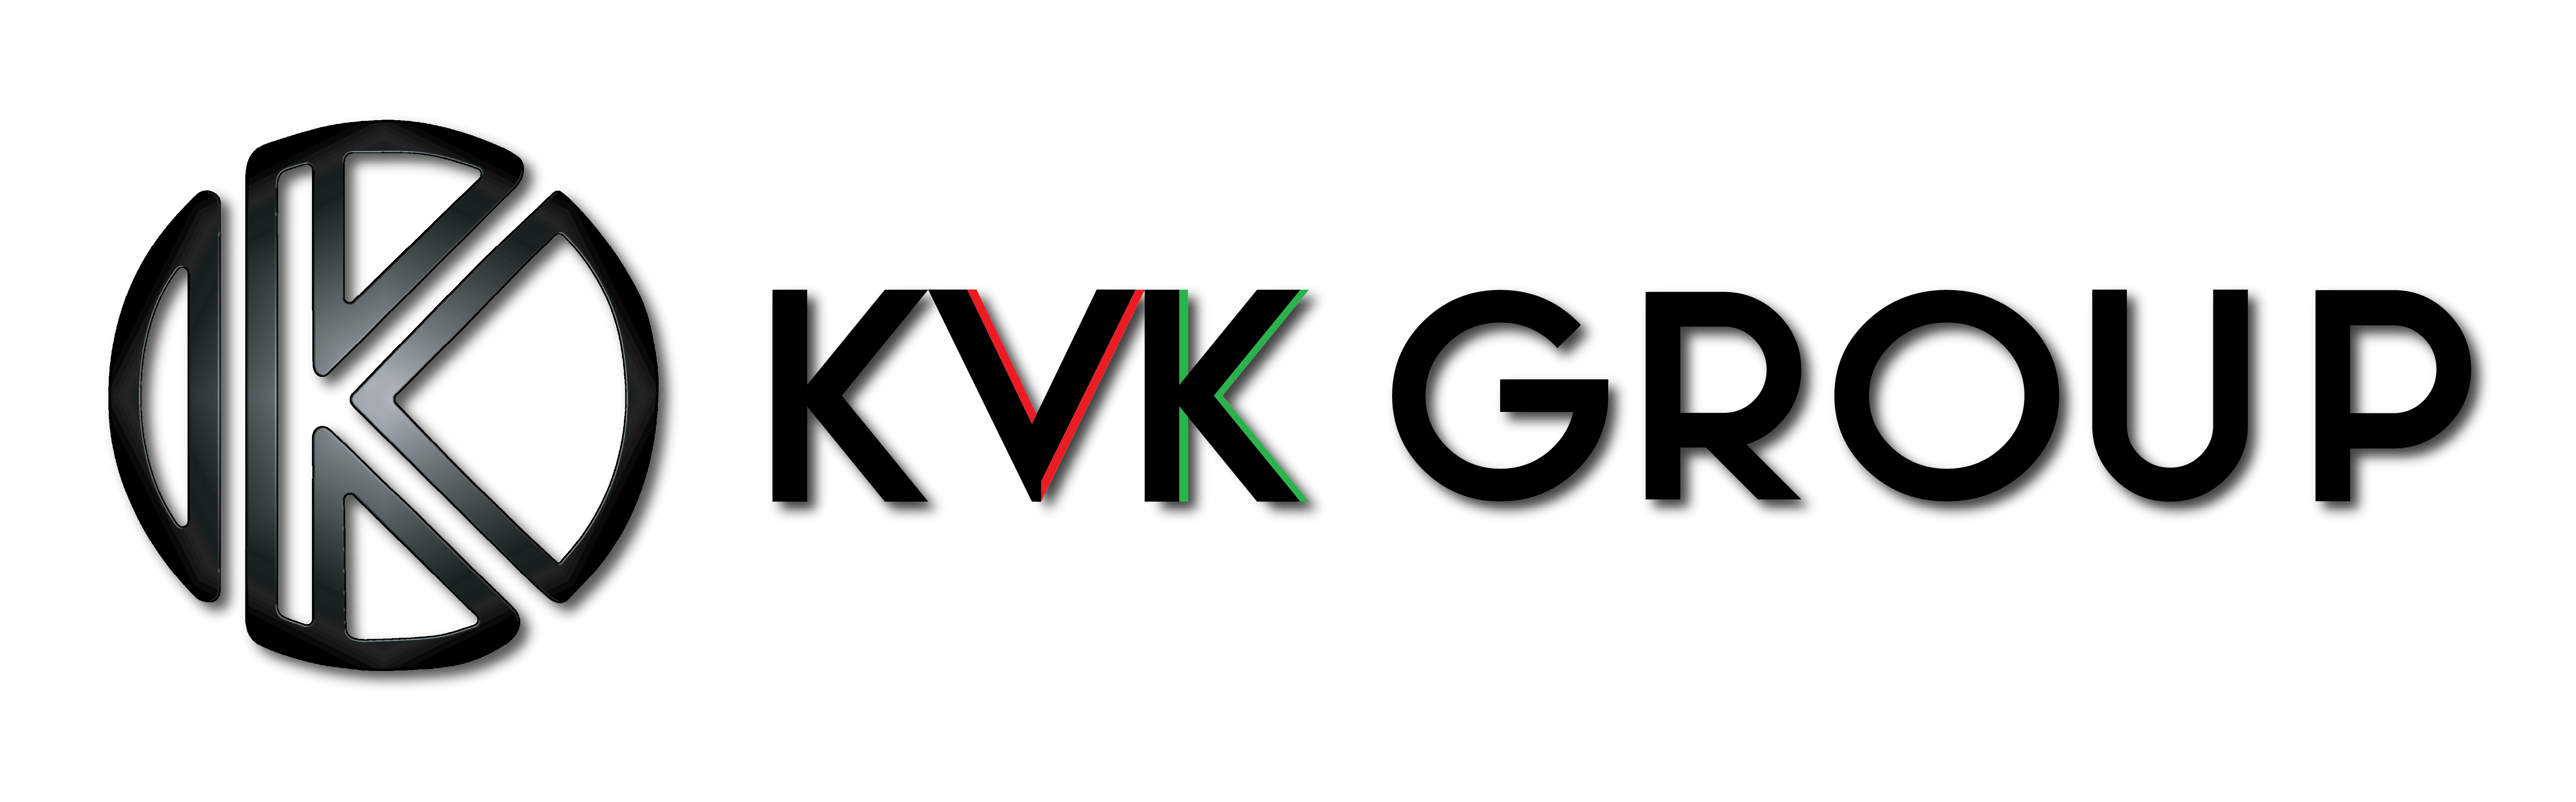 KVK Group